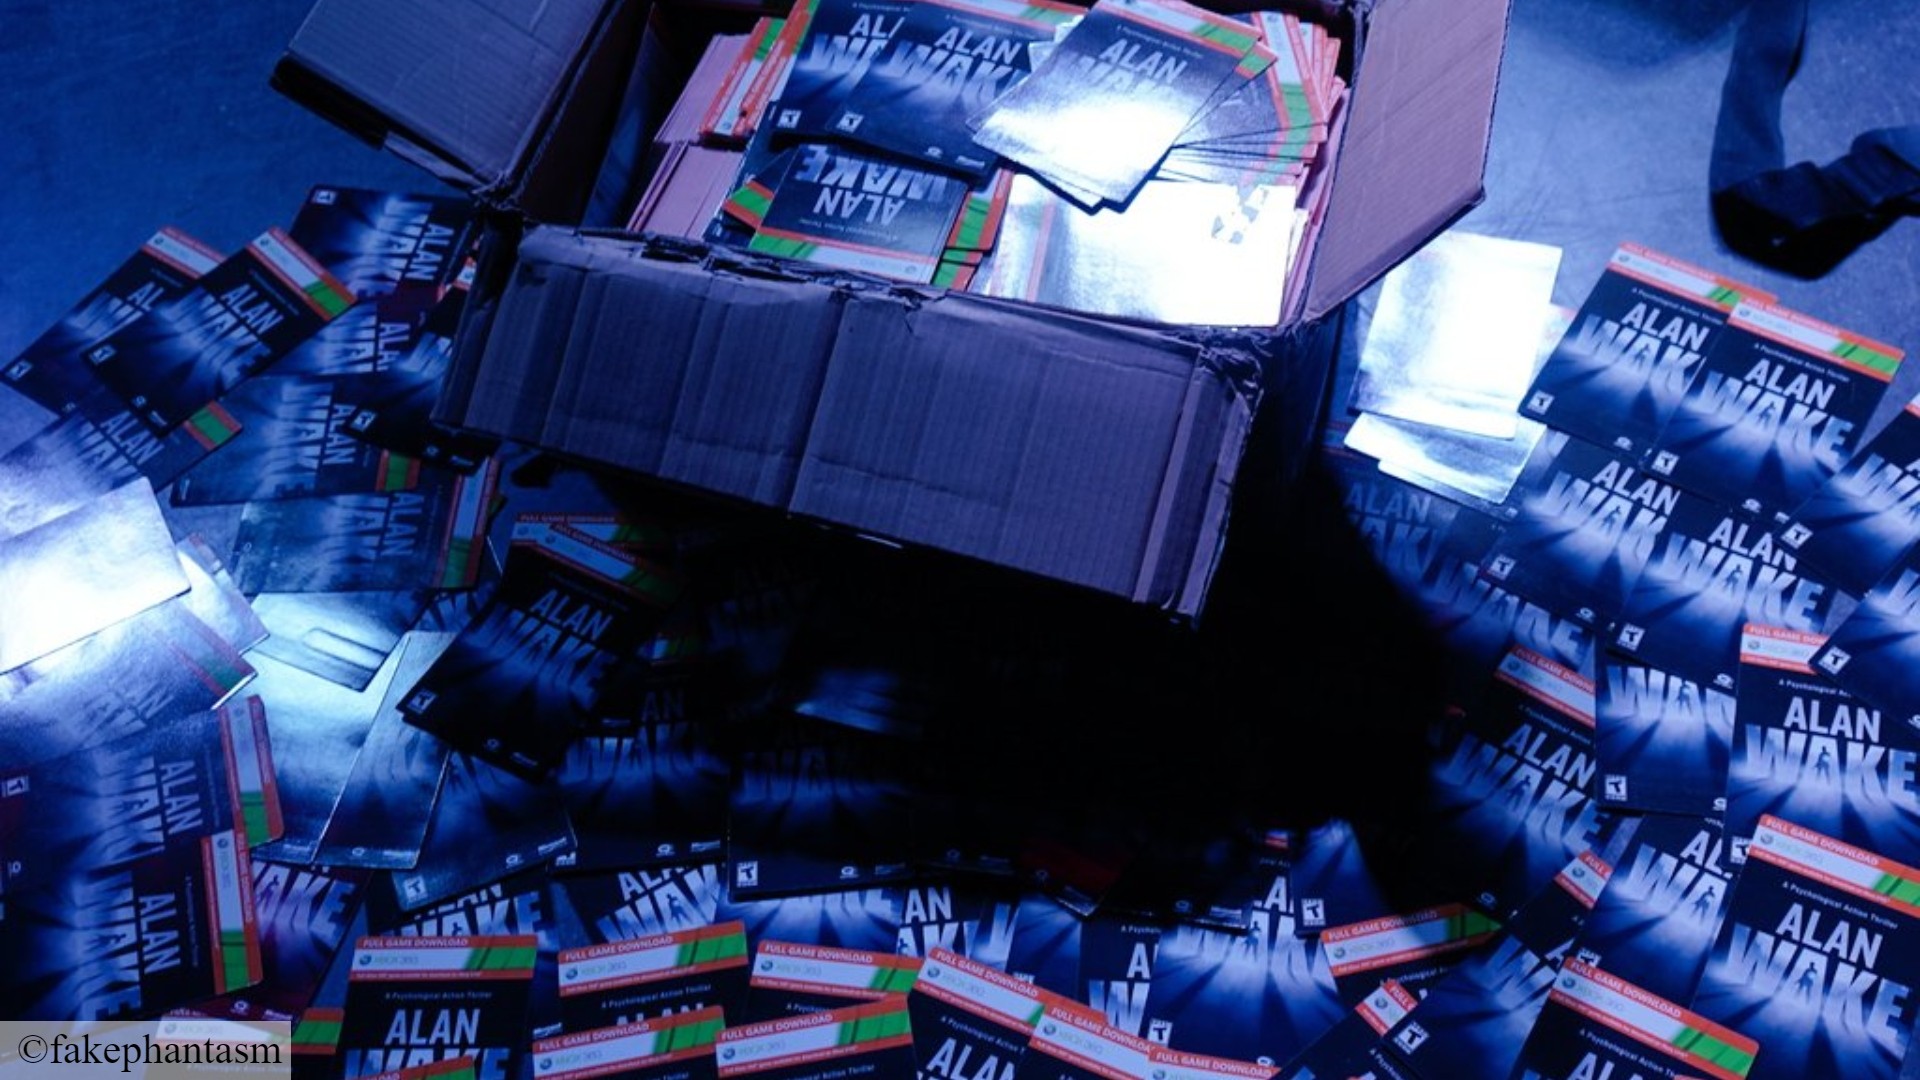 Alan Wake Steam Horror Game: Huge box of Alan Wake download cards